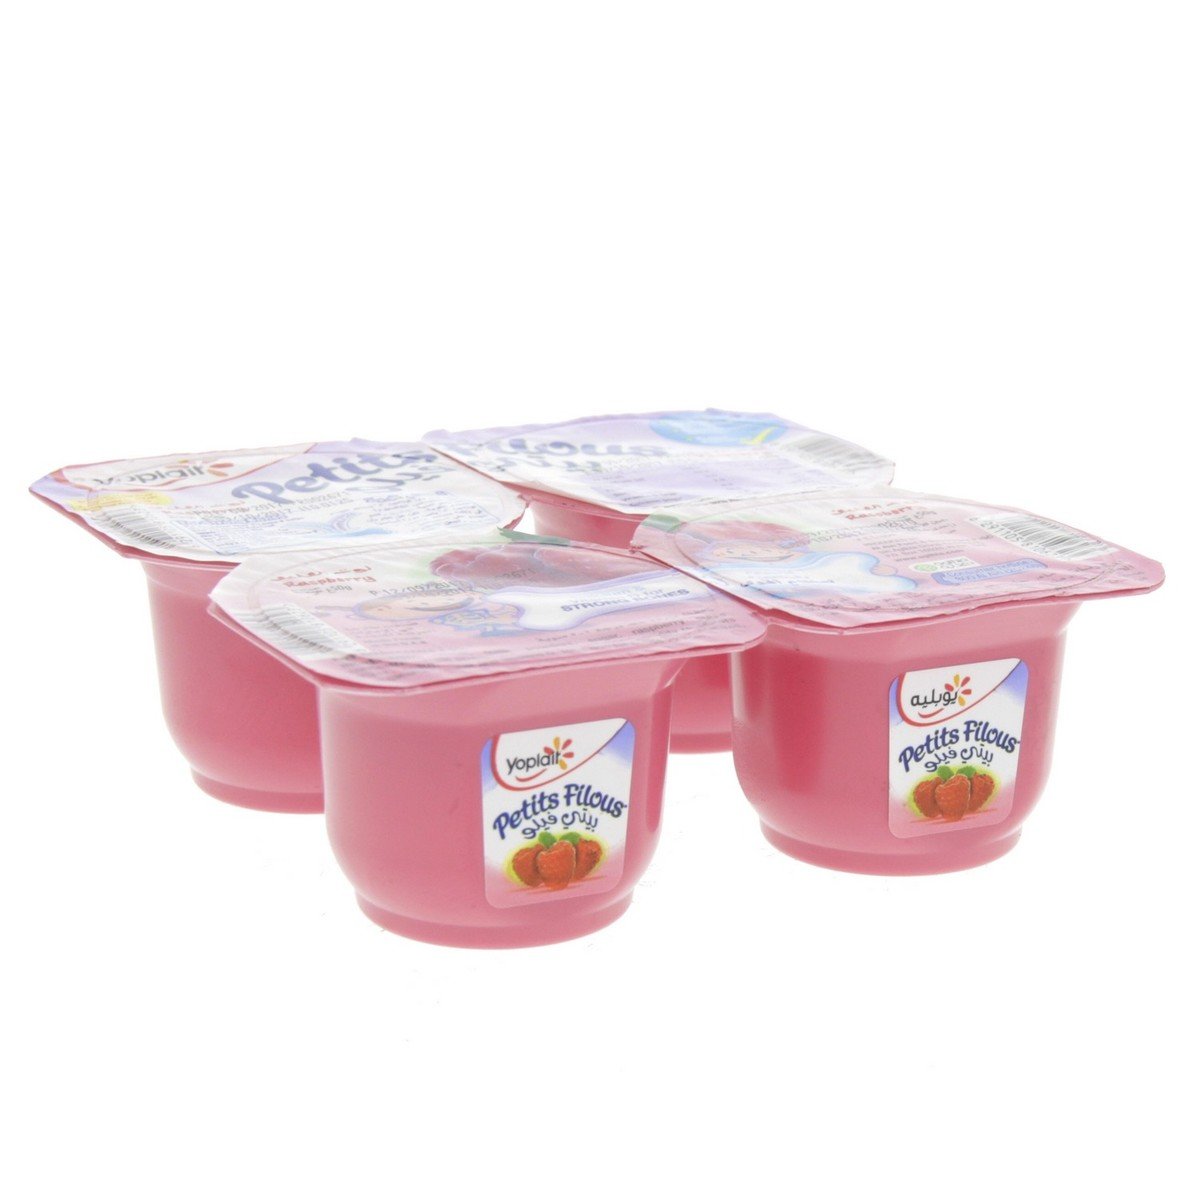 Yoplait Petit Filous Raspberry Flavoured Yoghurt 4 x 50 g